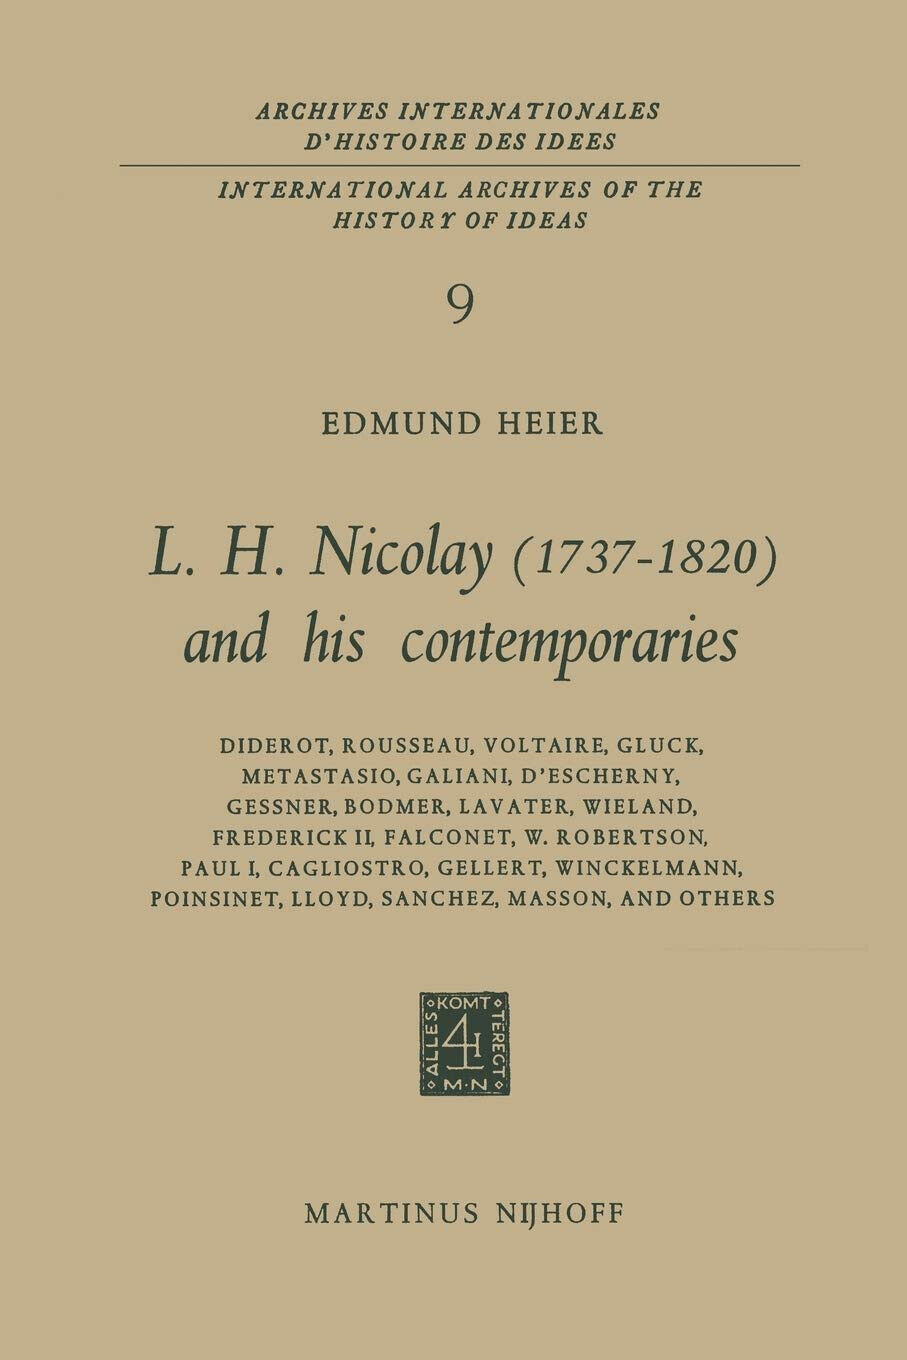 L.H. Nicolay (1737-1820) and his Contemporaries - E. Heier - Springer, 2011